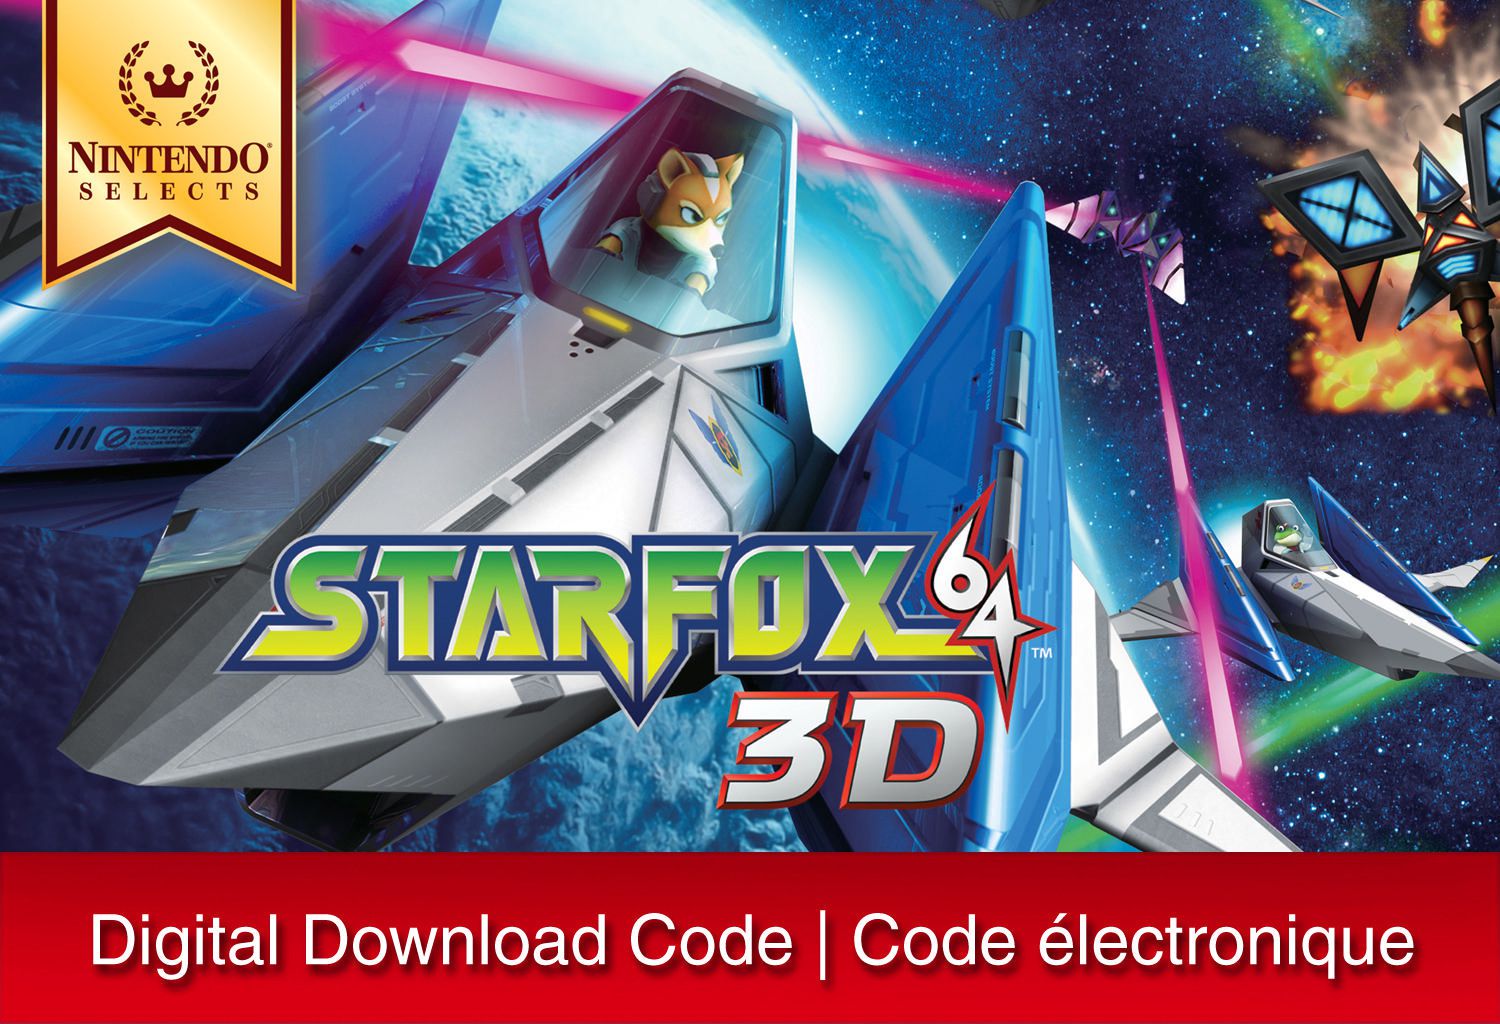 star fox 64 3d cia download